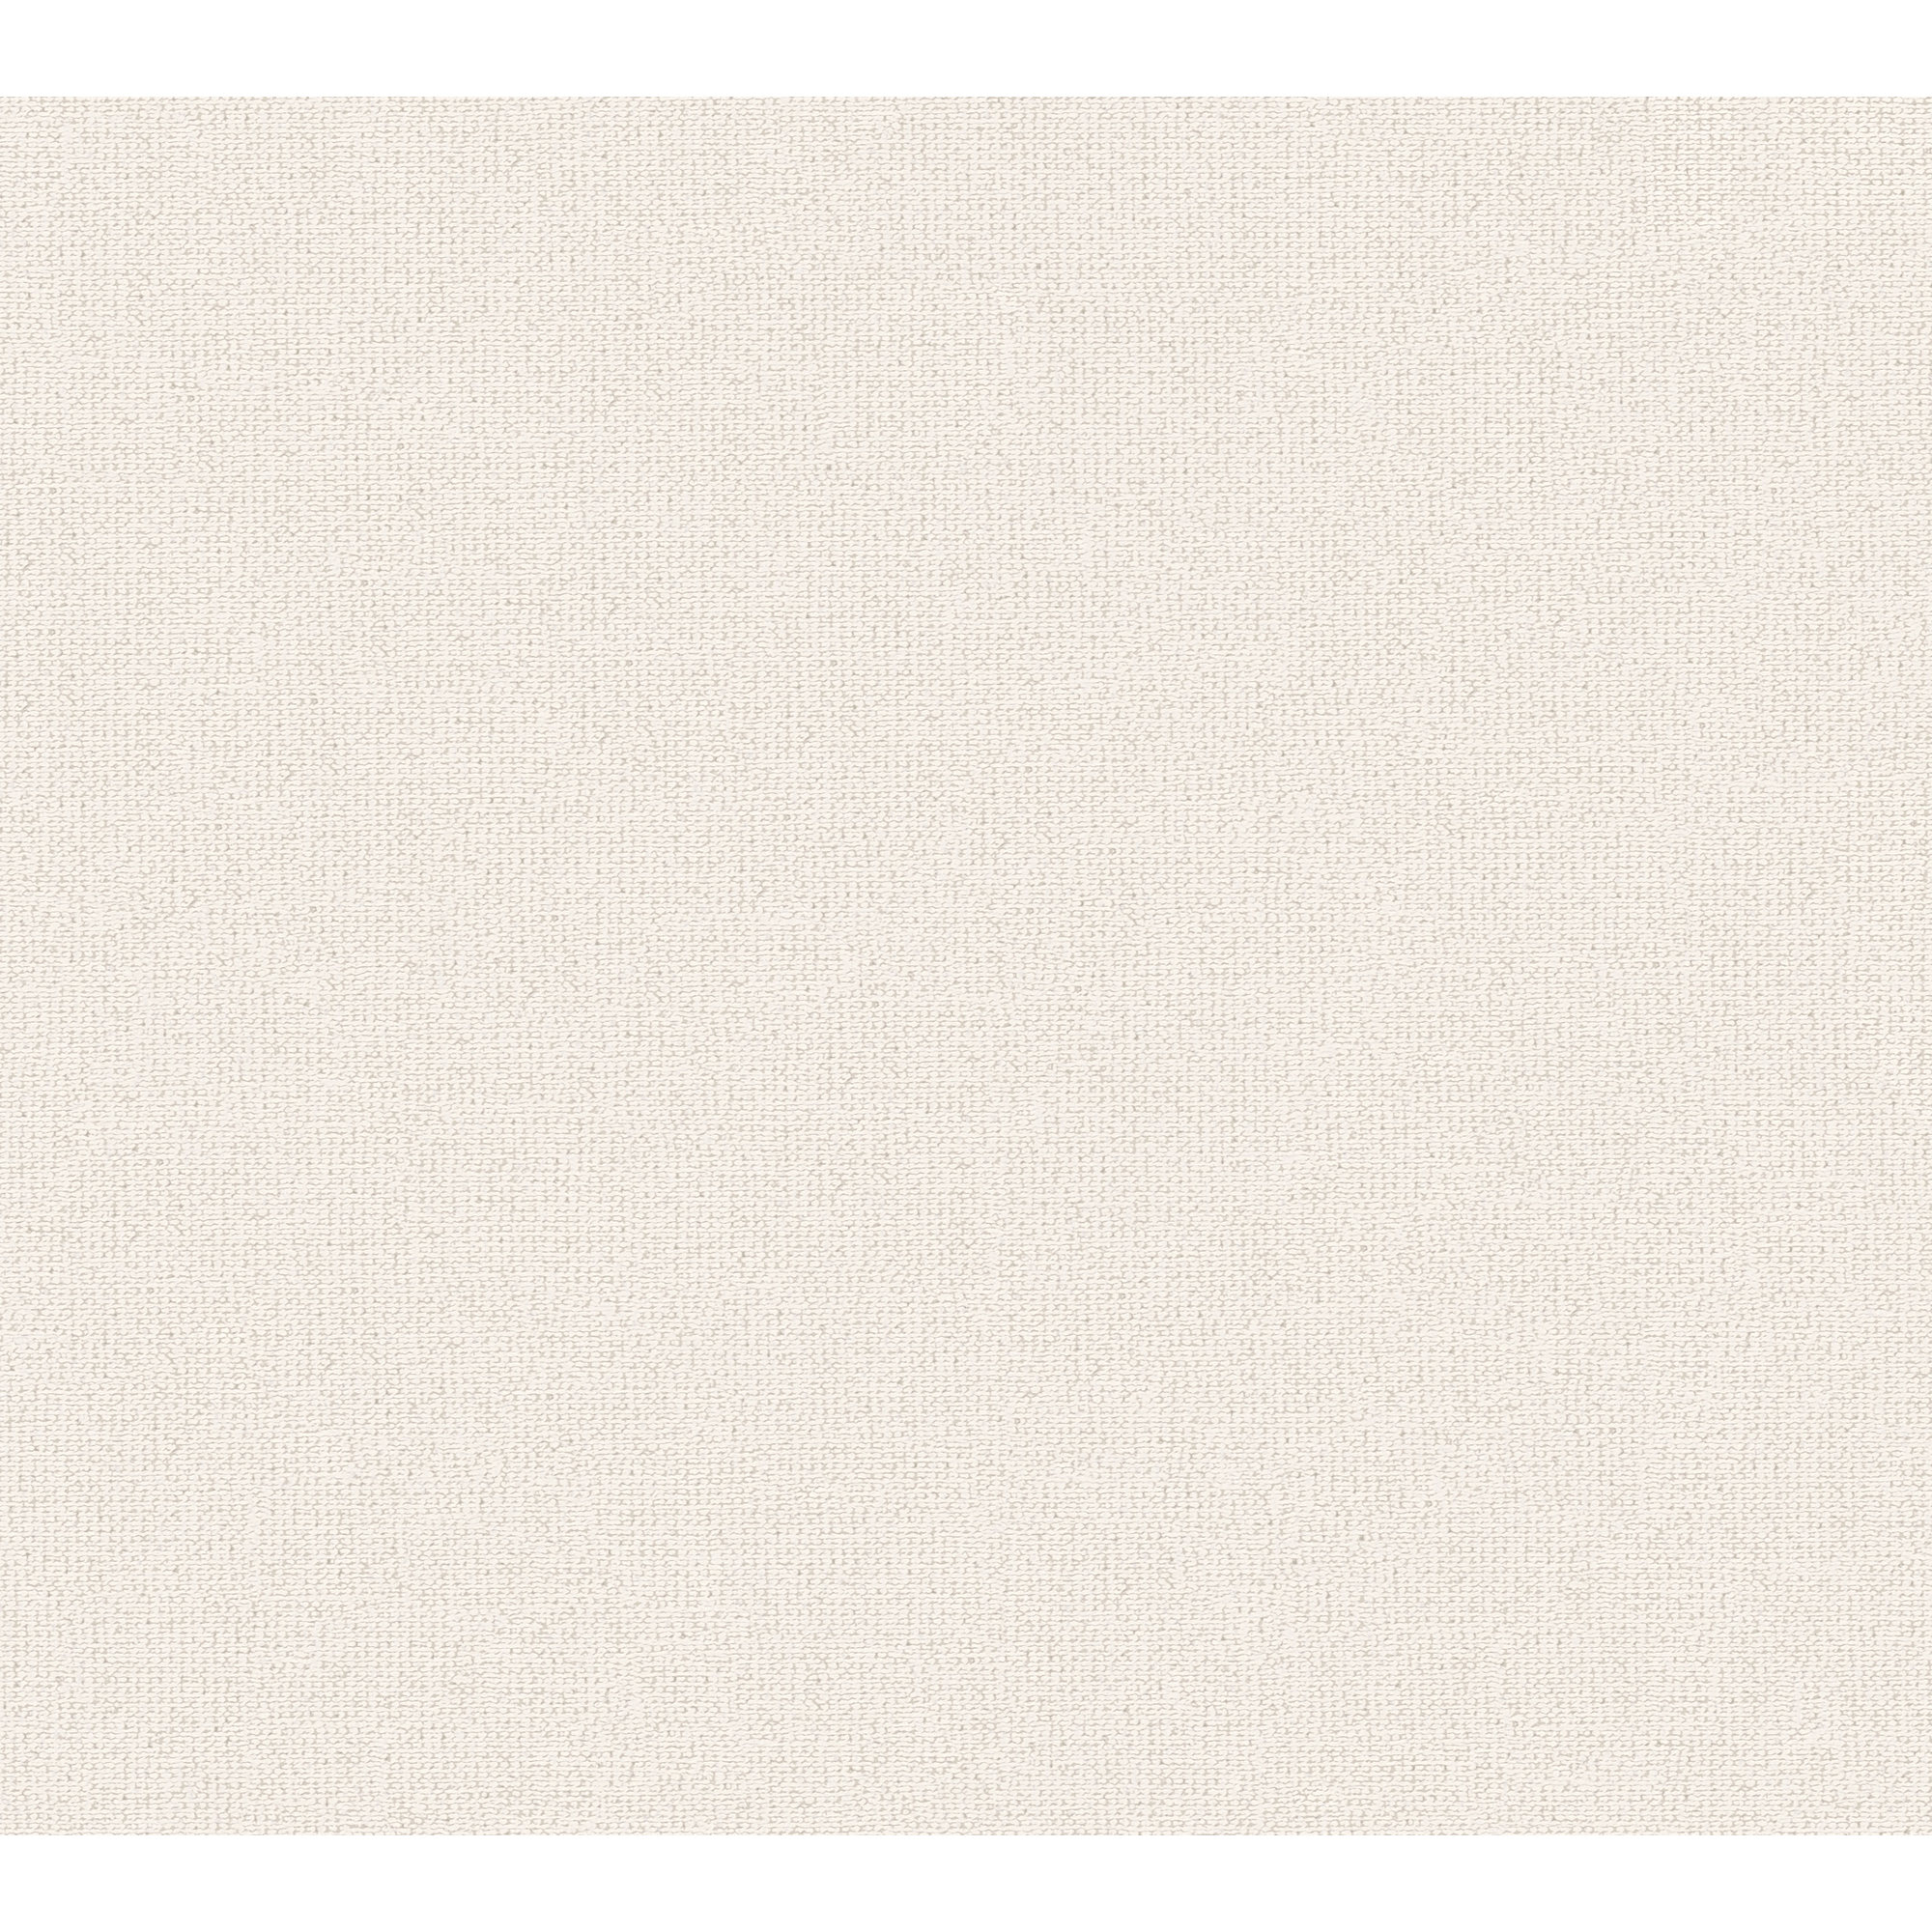 Vliestapete 'Attractive' Unistruktur creme/beige 10,05 m x 0,53 m + product picture